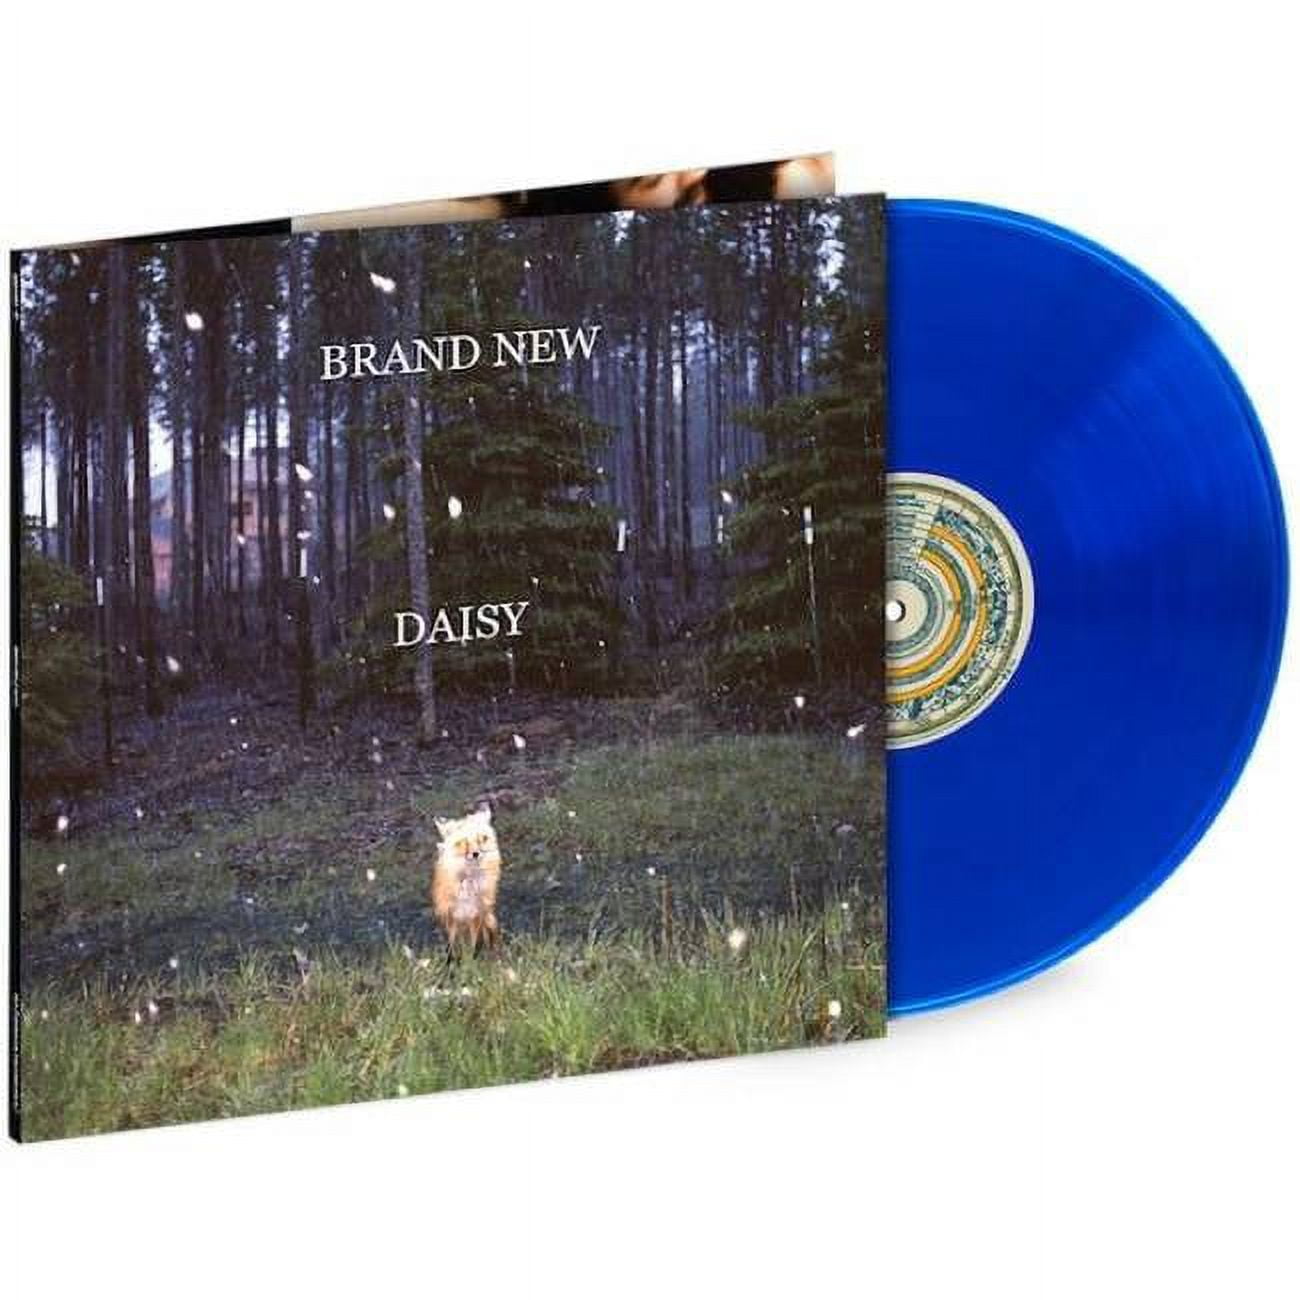 Daisy (Blue Limited Edition) Exclusive Vinyl LP 